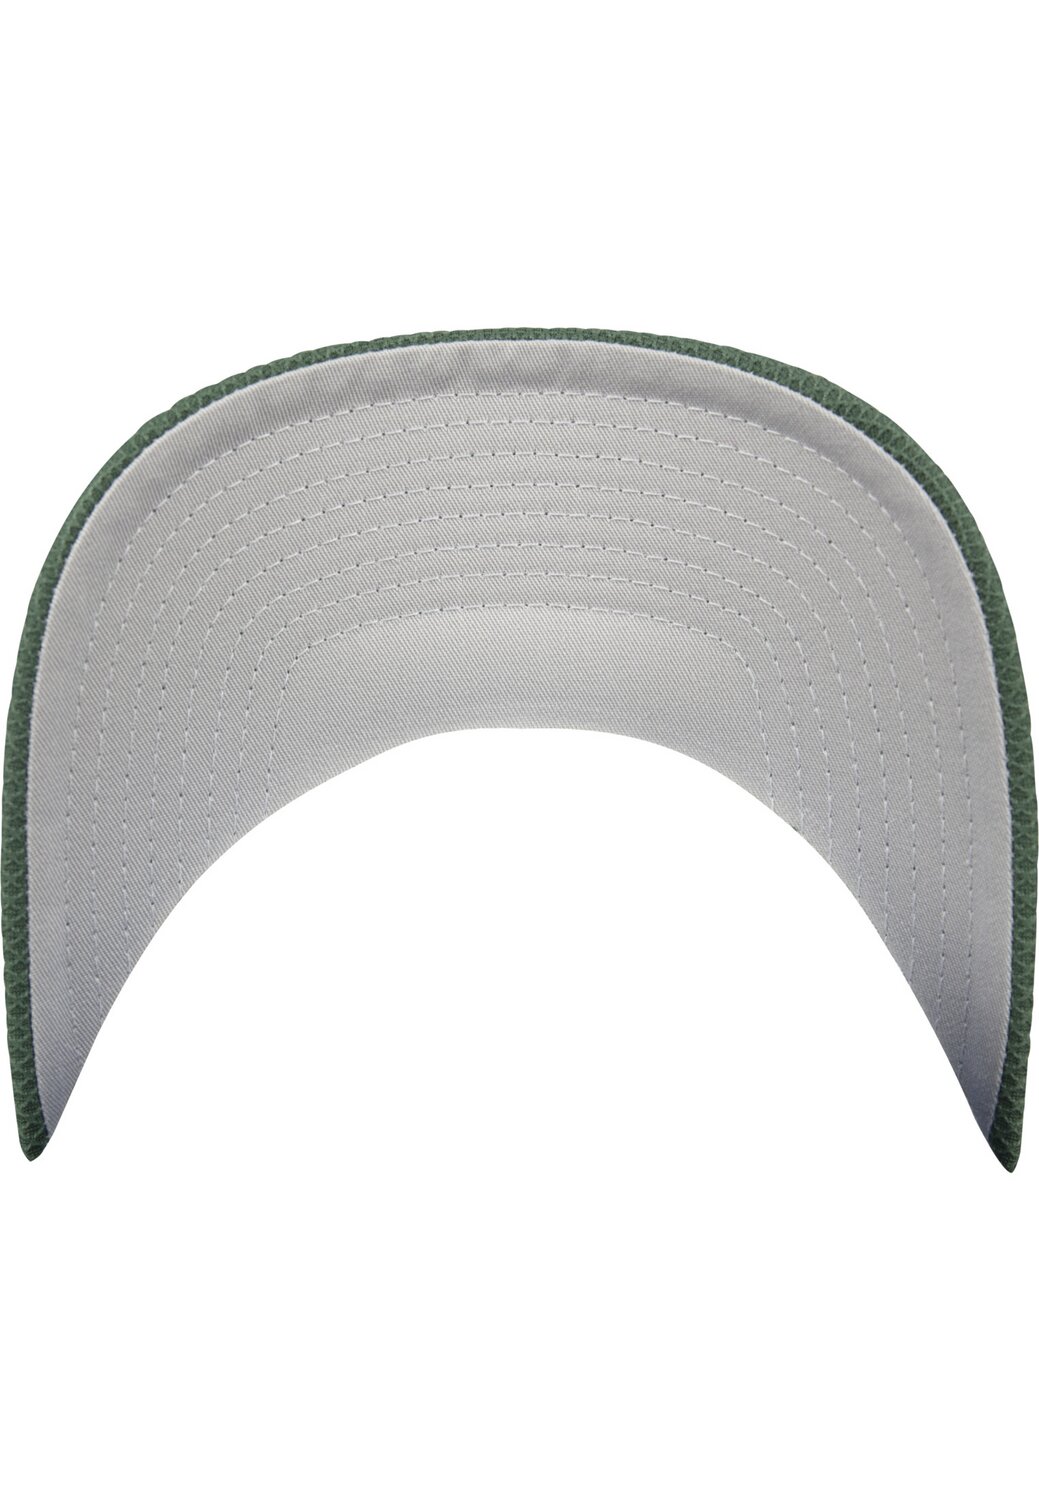 Baseball Cap 110 Flexfit Hybrid green | MAXISCOOT